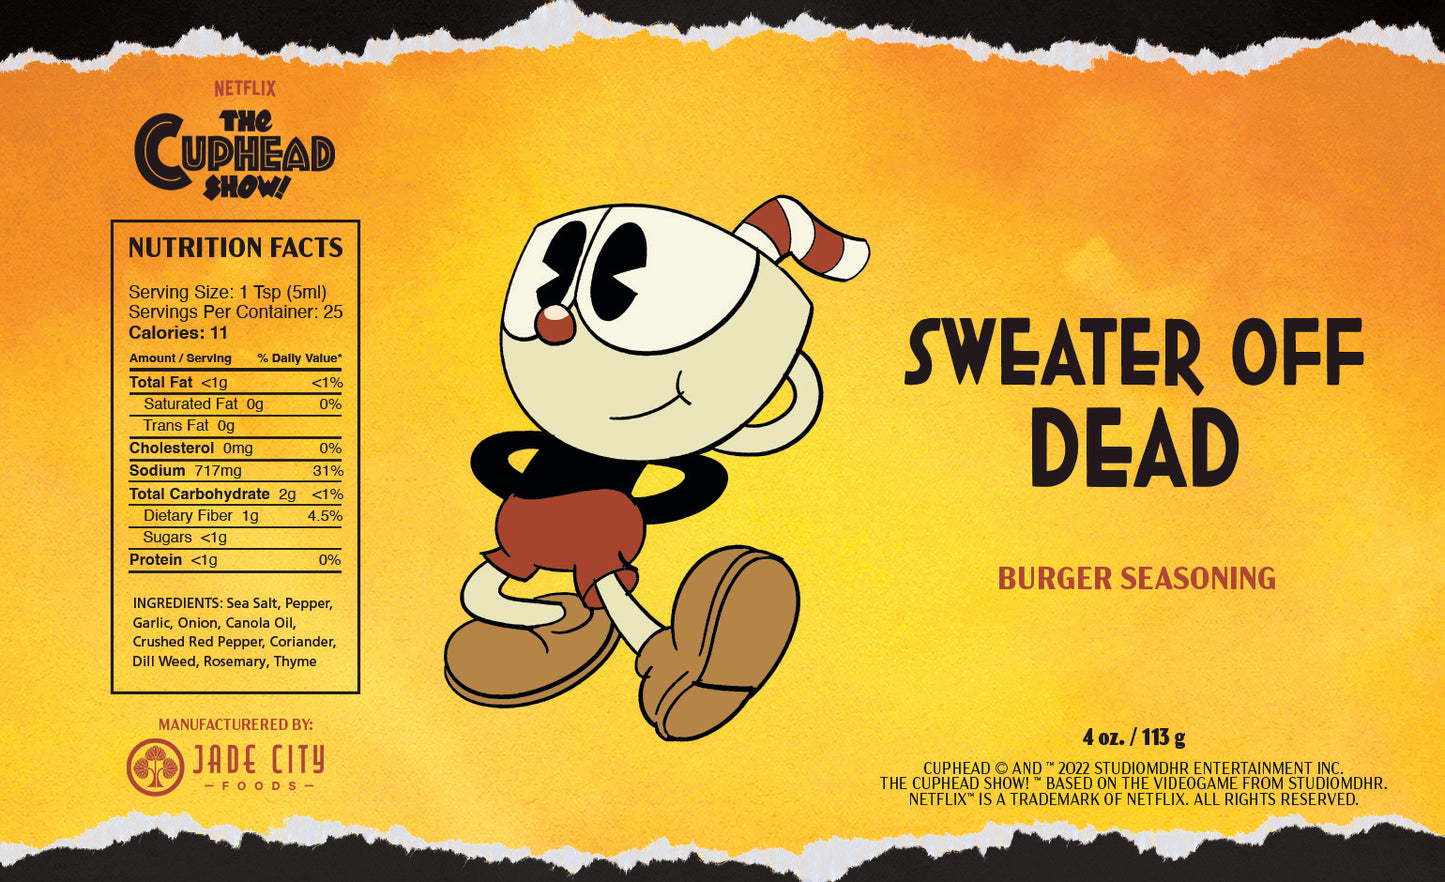 Cuphead's Sweater Off Dead : Burger Seasoning